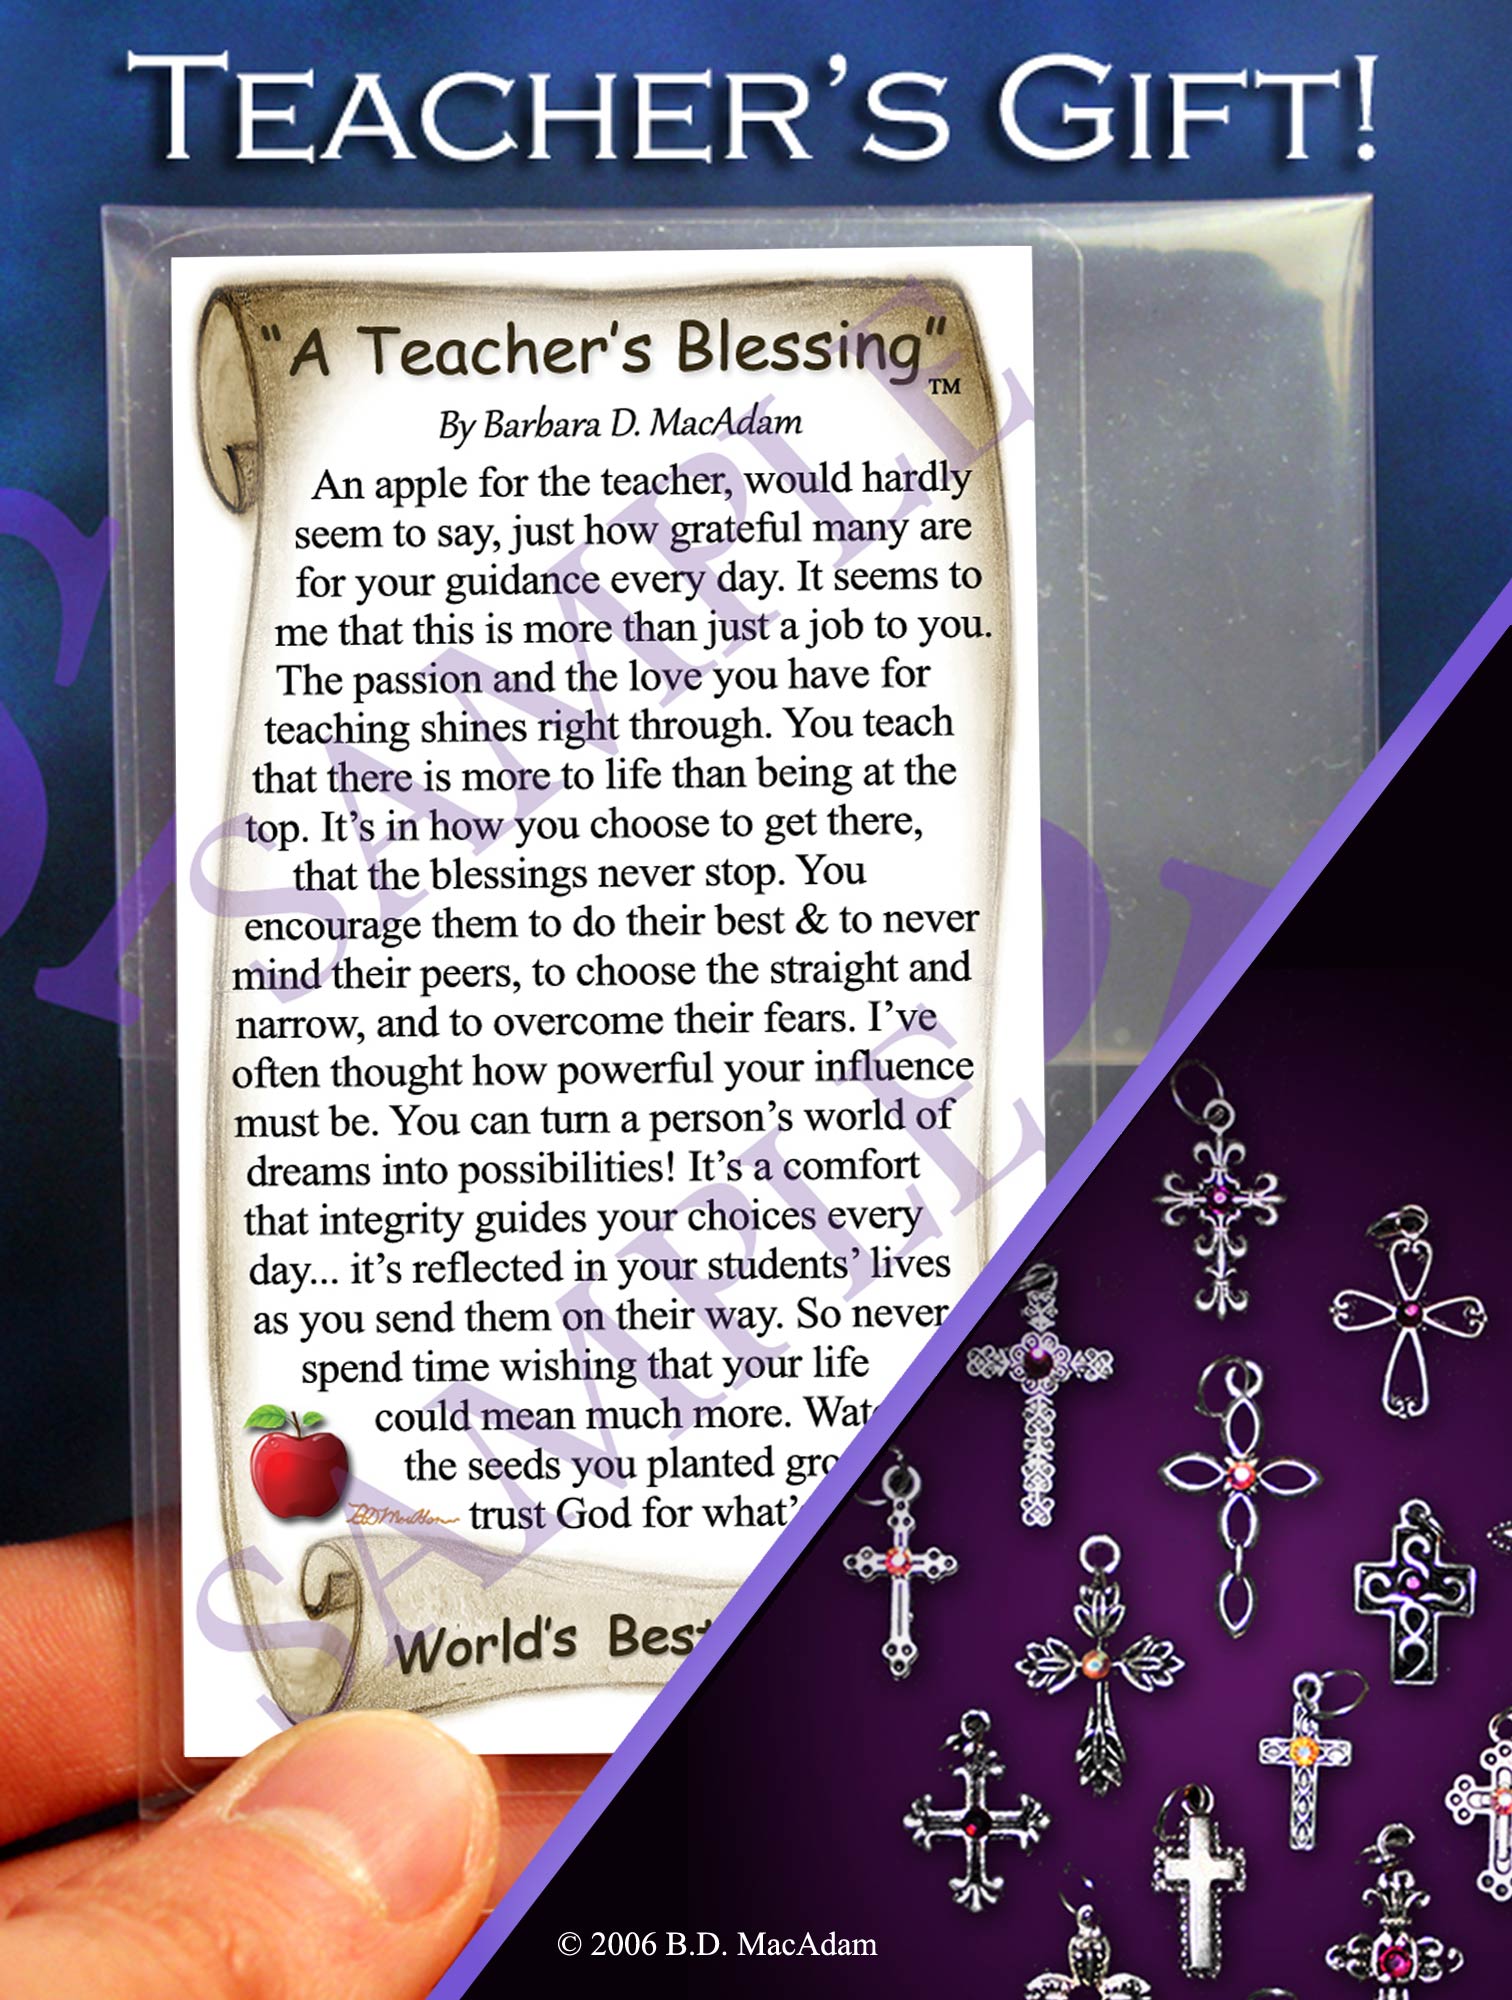 A Teachers Blessing - Pocket Blessing | PurpleWishingGate.com